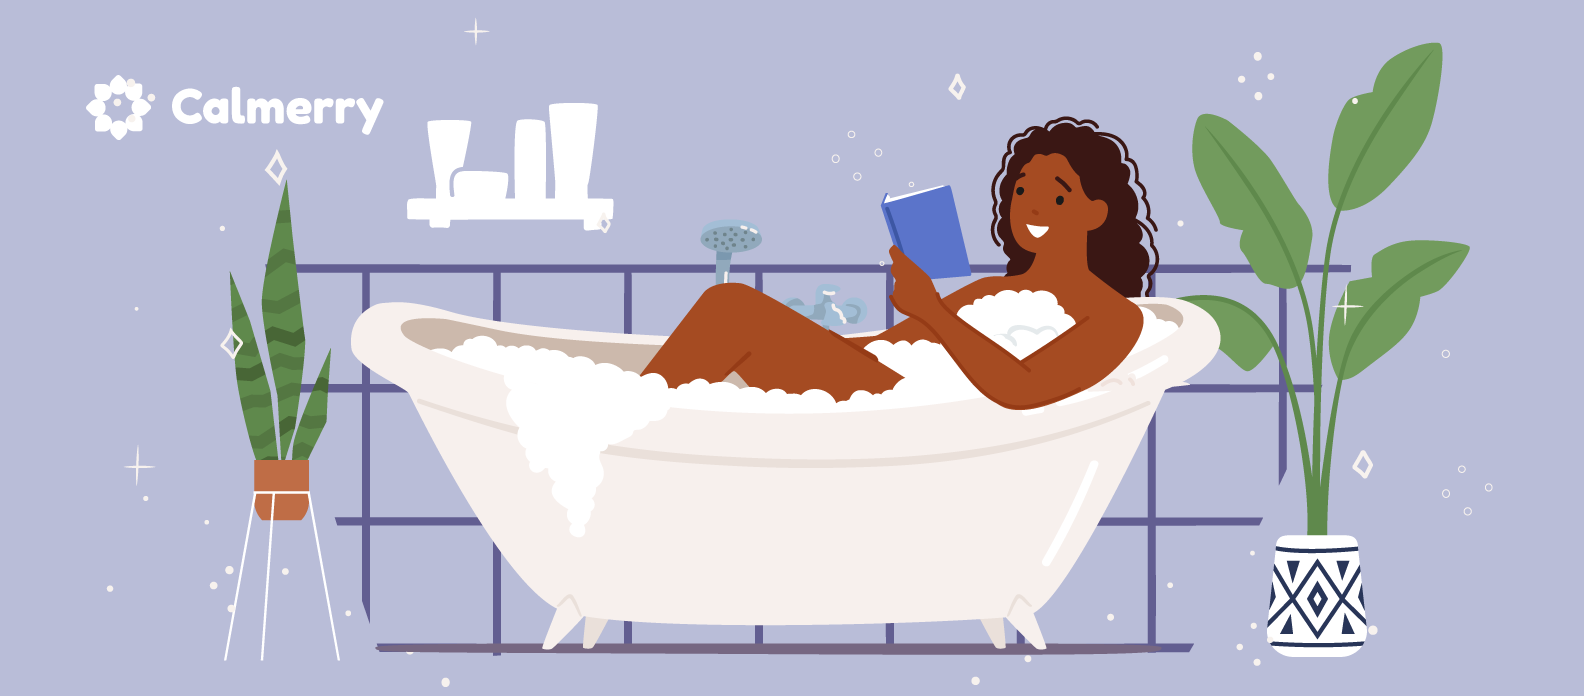 A black woman is taking a hot bath